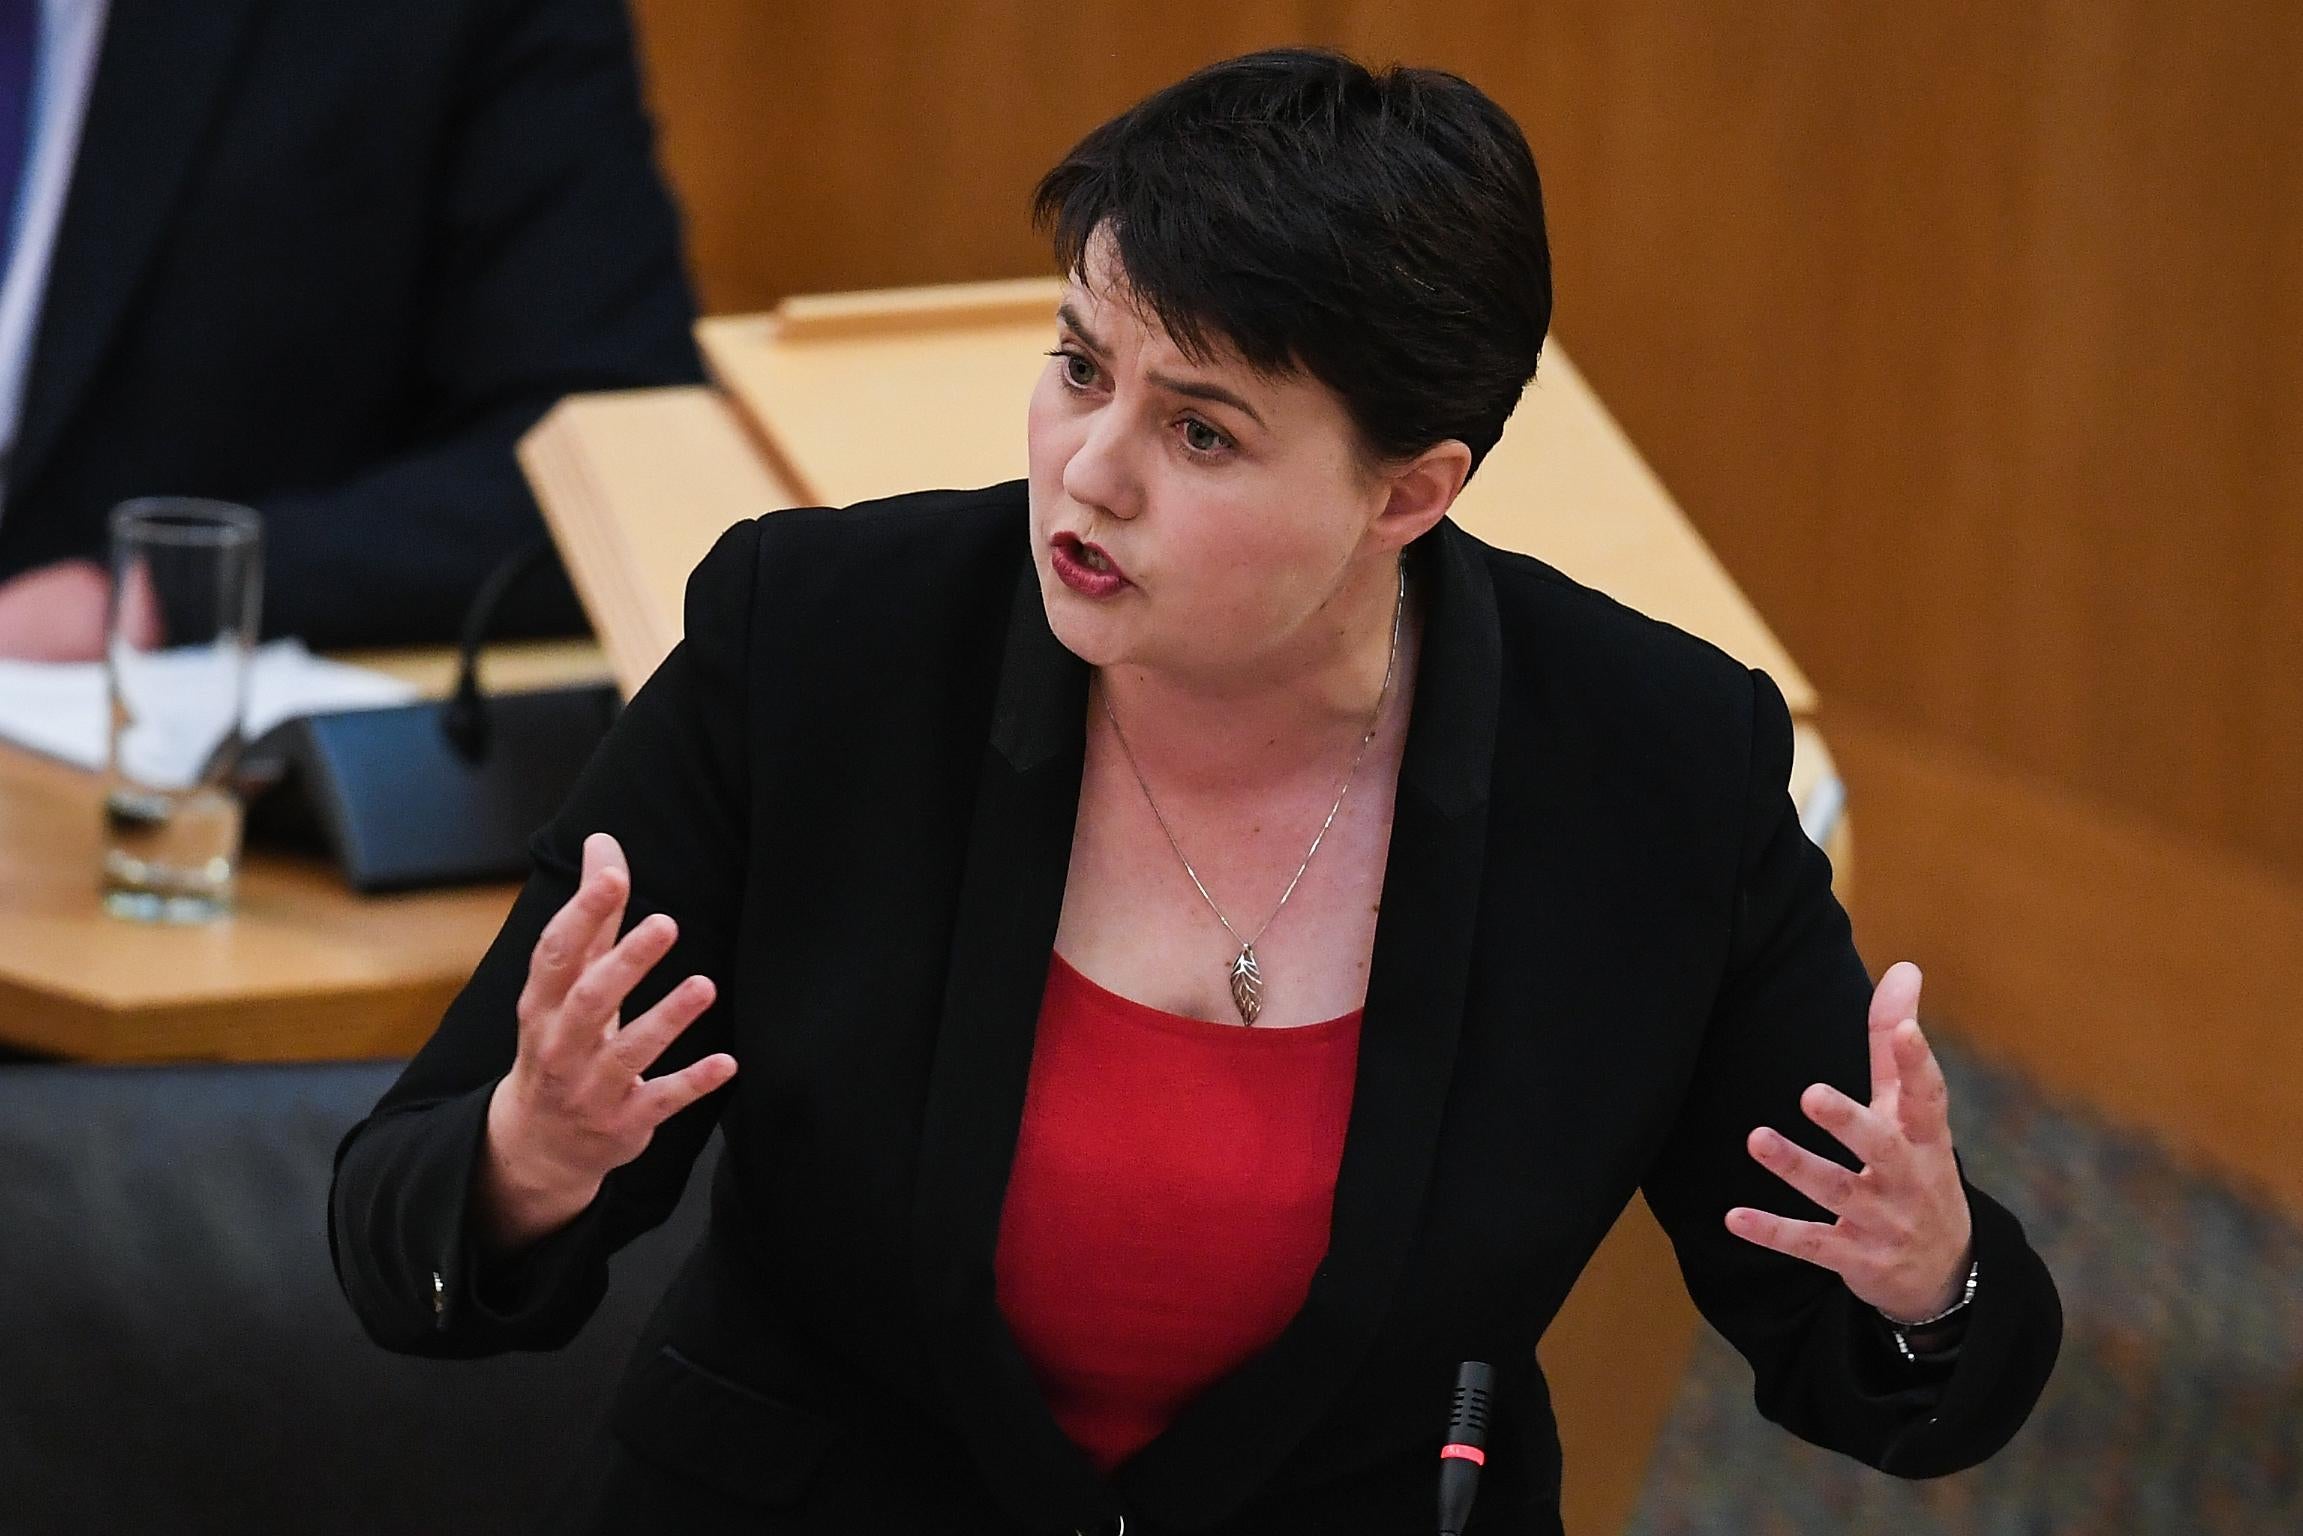 Scottish Conservative leader Ruth Davidson